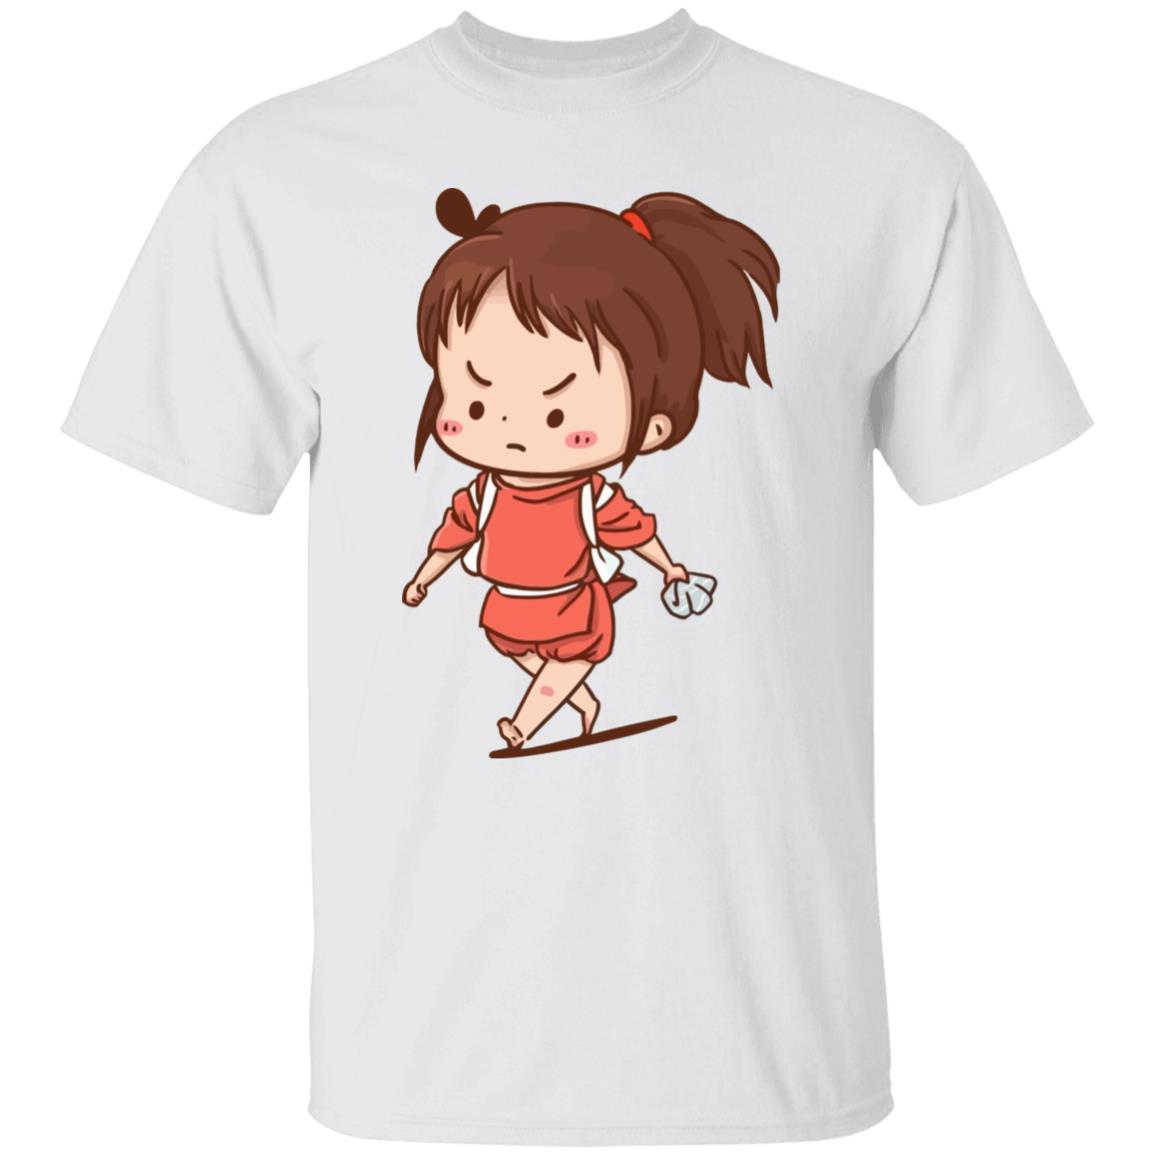 New Spirited Away shirt…I think the design is nice! : r/ghibli